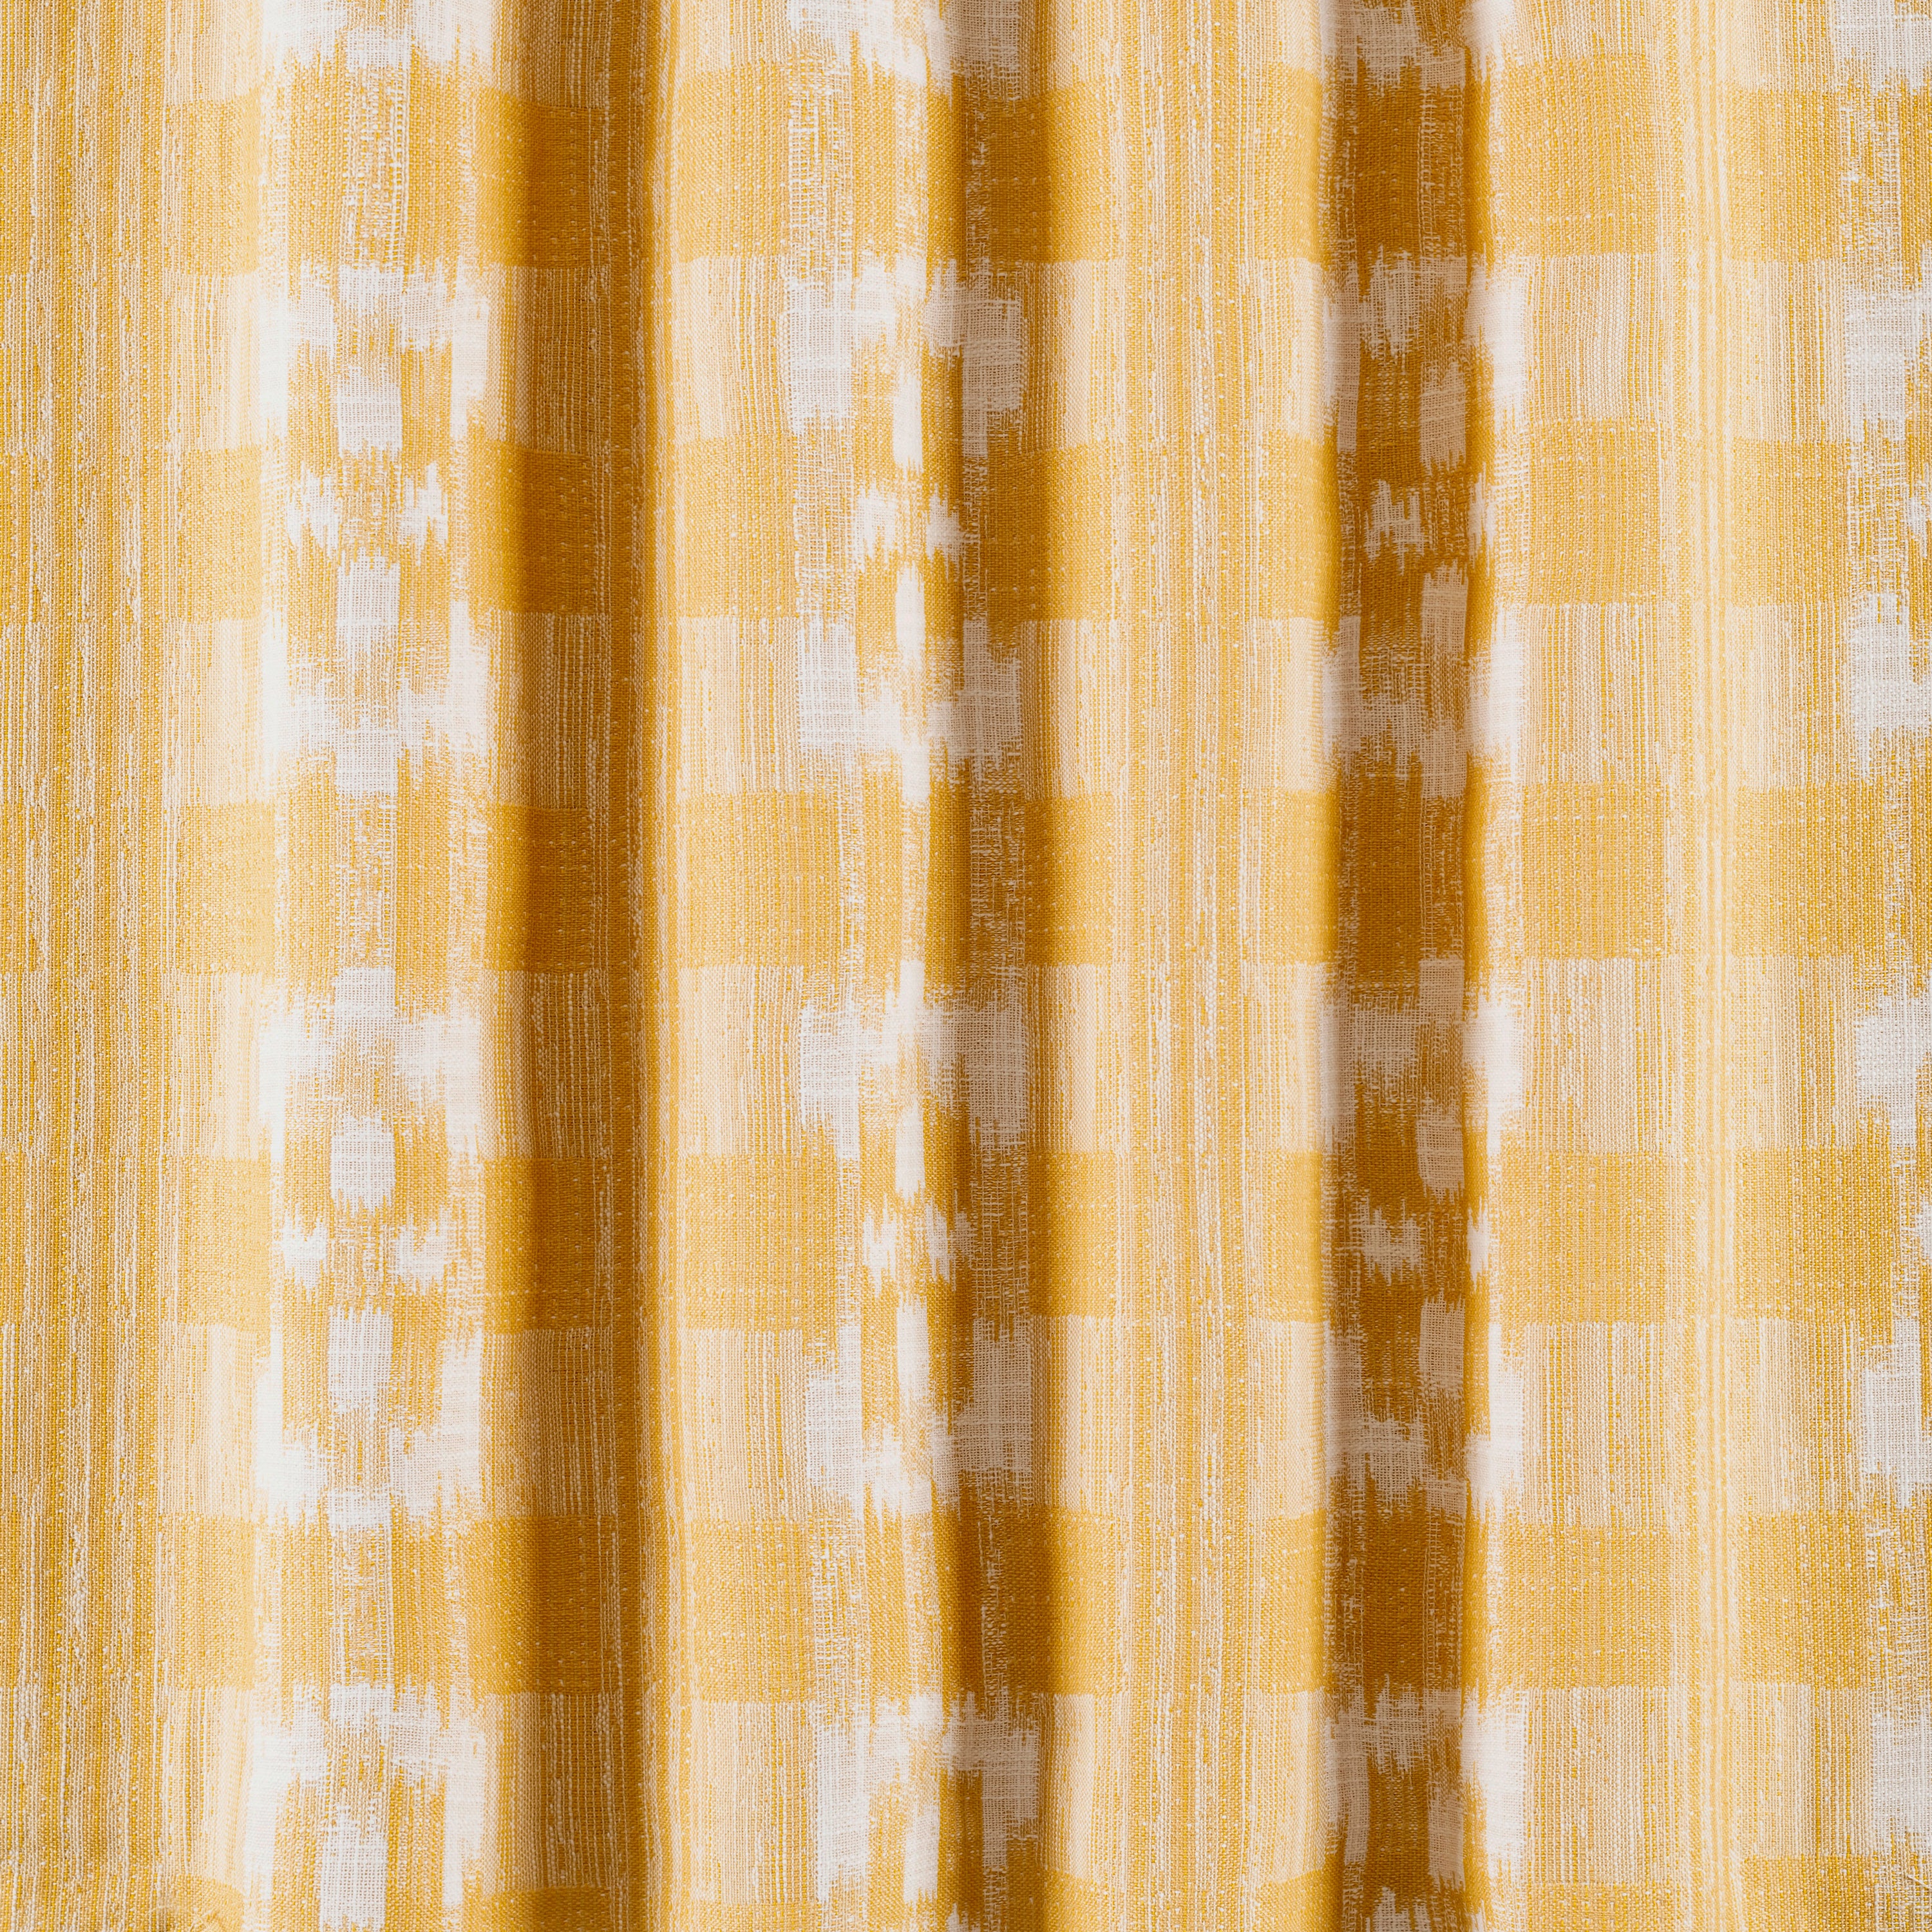 Mahalo Performance Fabric